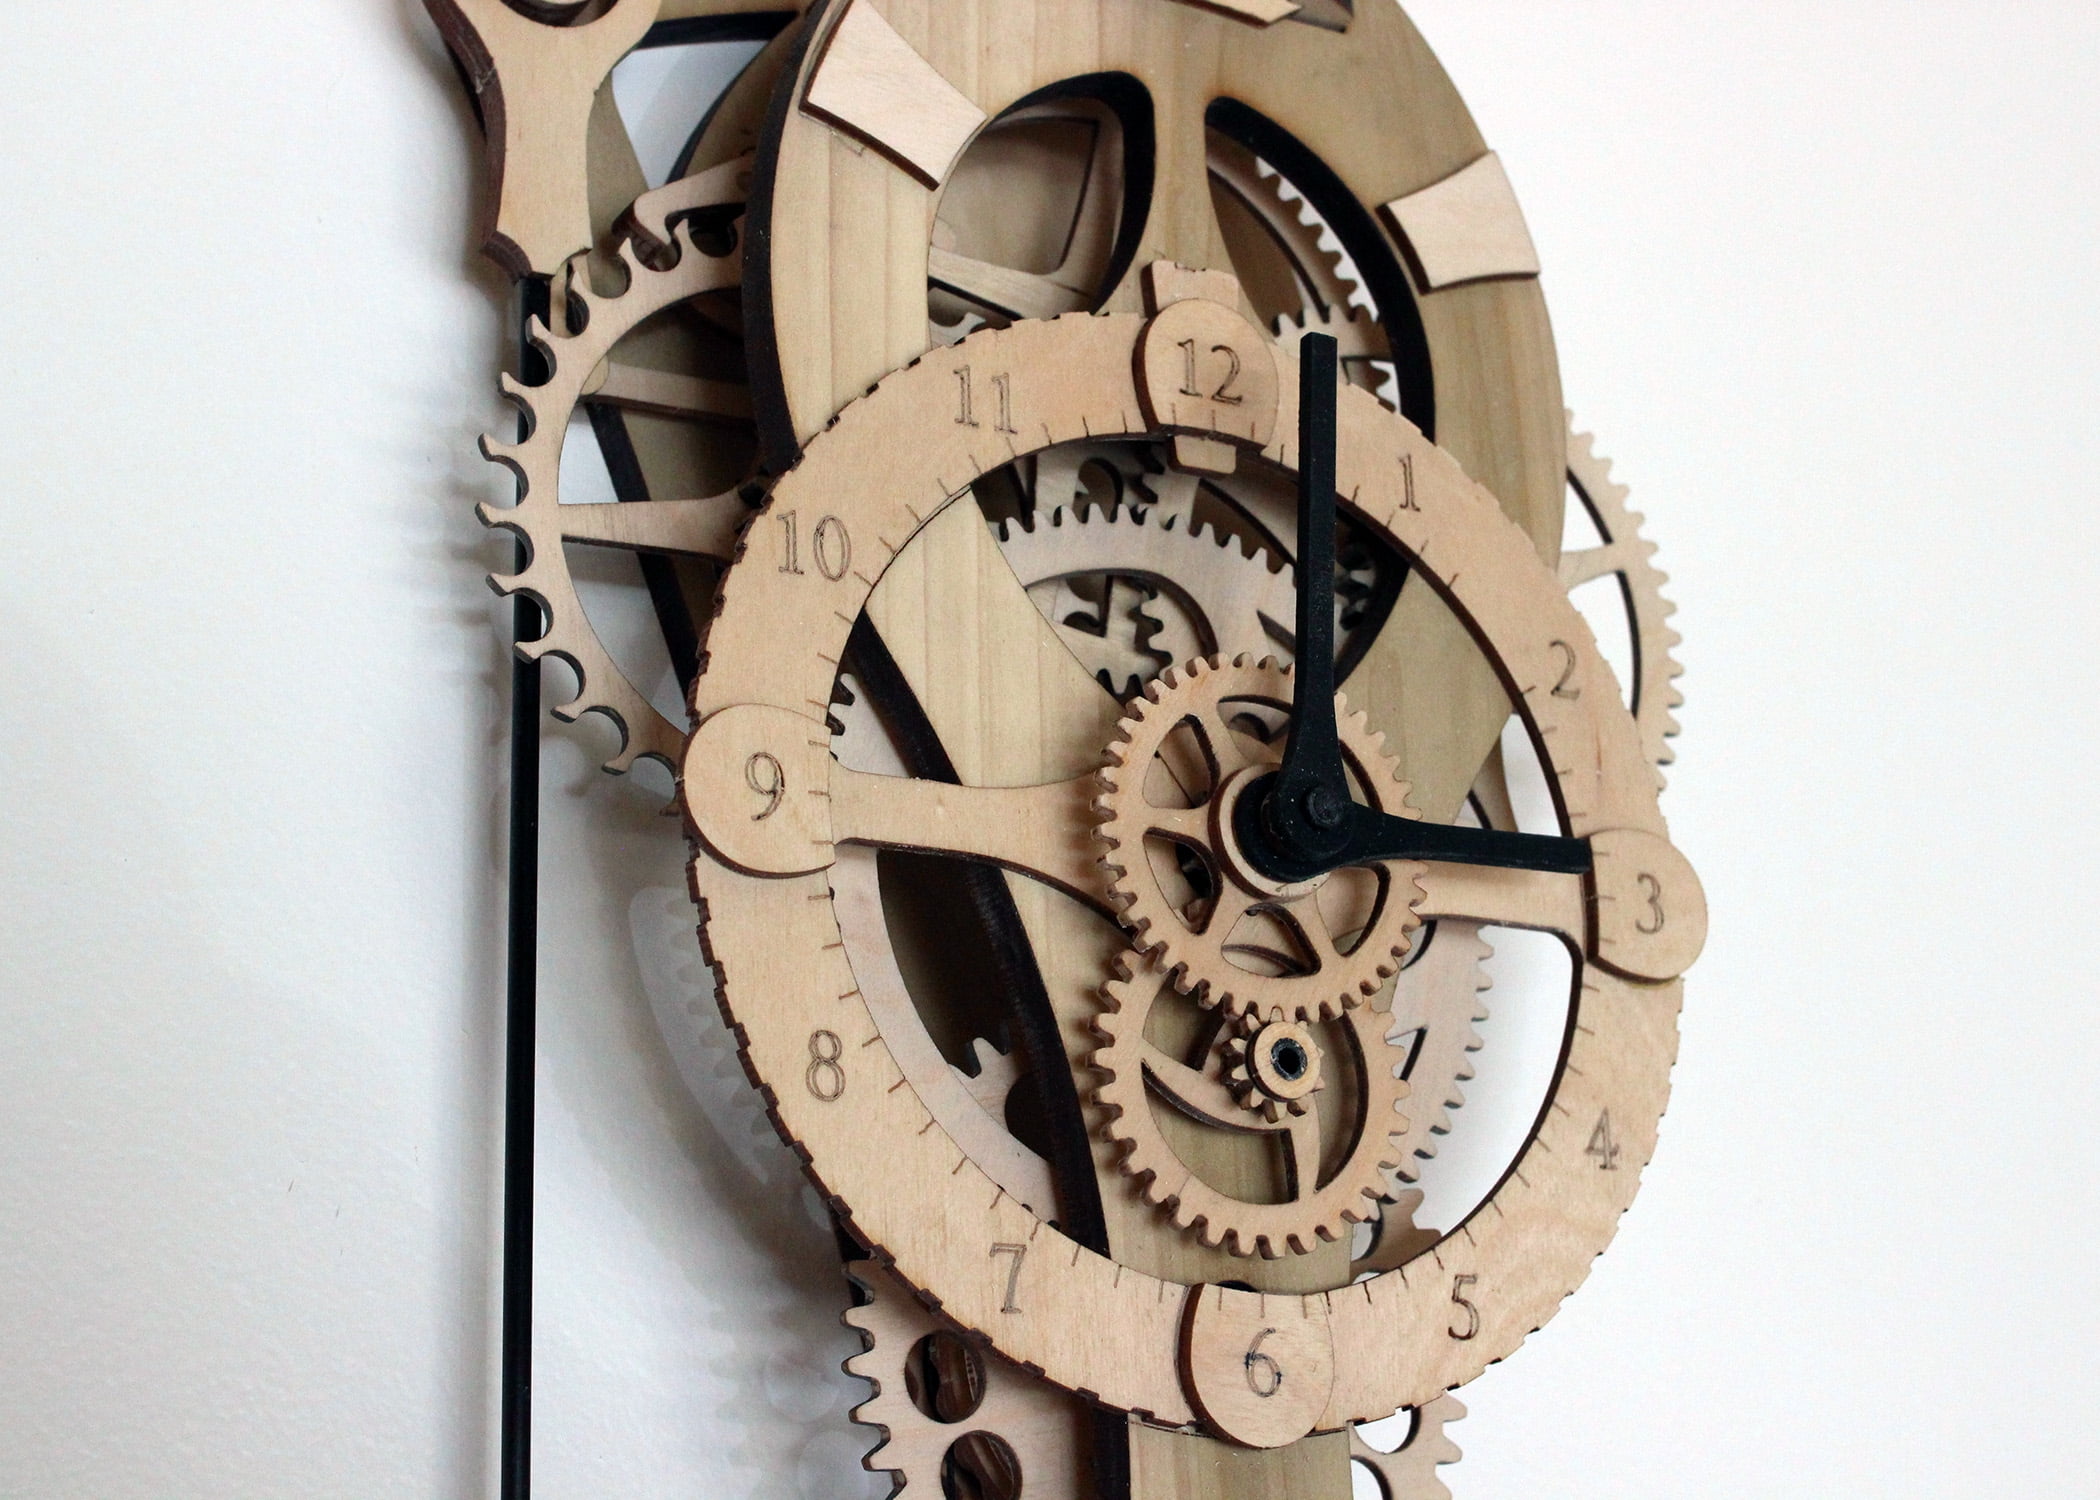 Deluxe Mechanical Wood Vera Clock Kit DIY Advanced Project